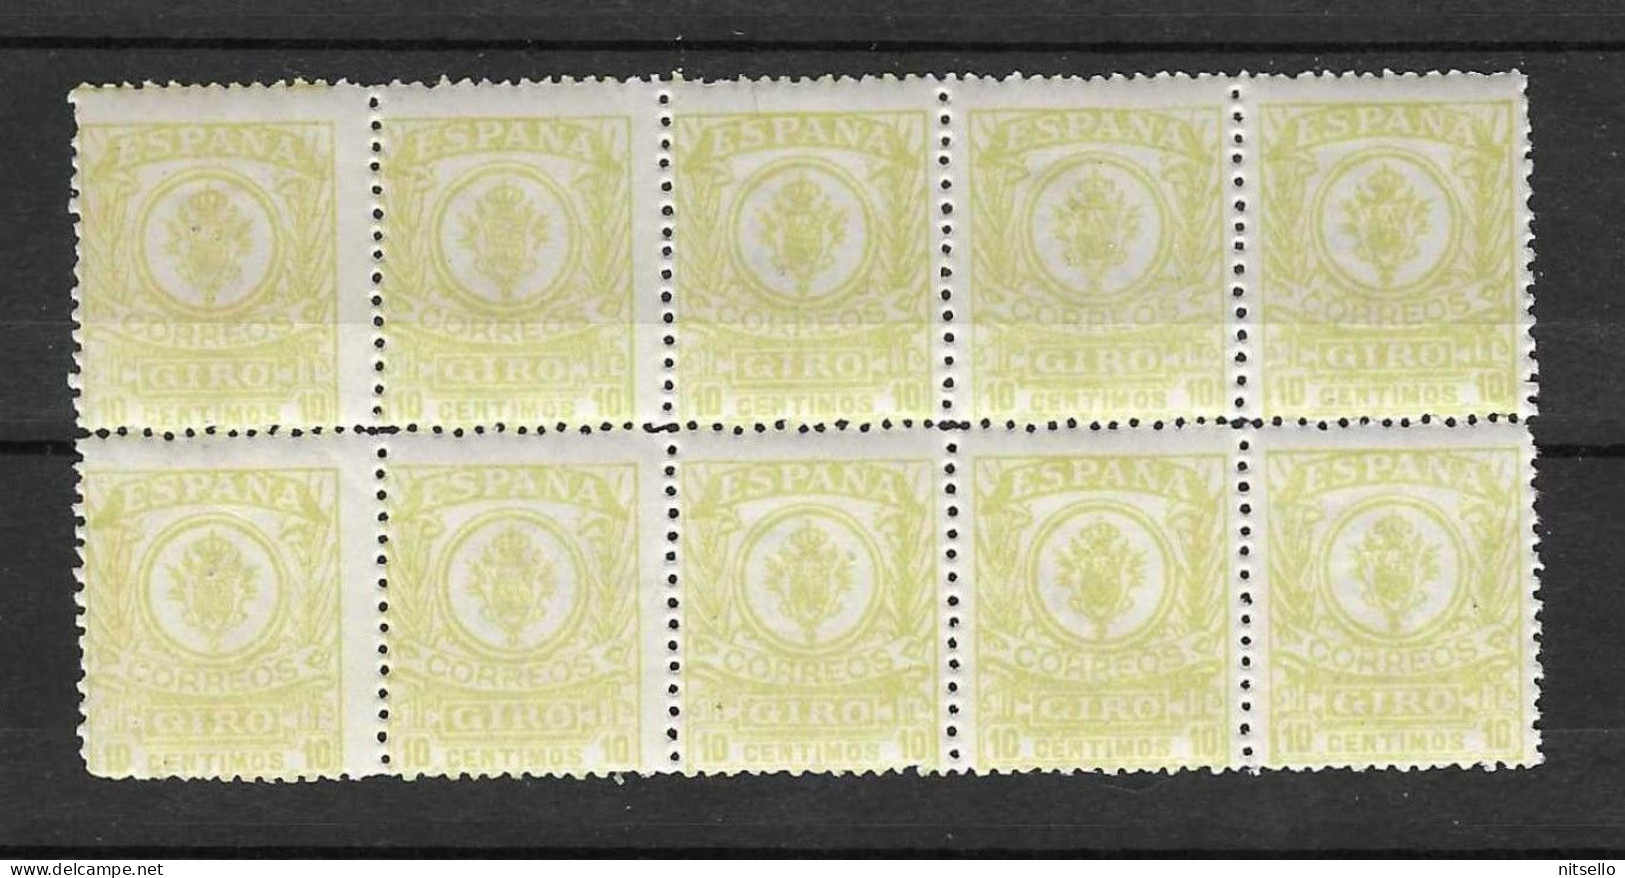 LOTE 1891 D  ///  (C025) ESPAÑA GIRO  EDIFIL Nº 2  BLOQ DE 10 SELLOS **MNH - Revenue Stamps